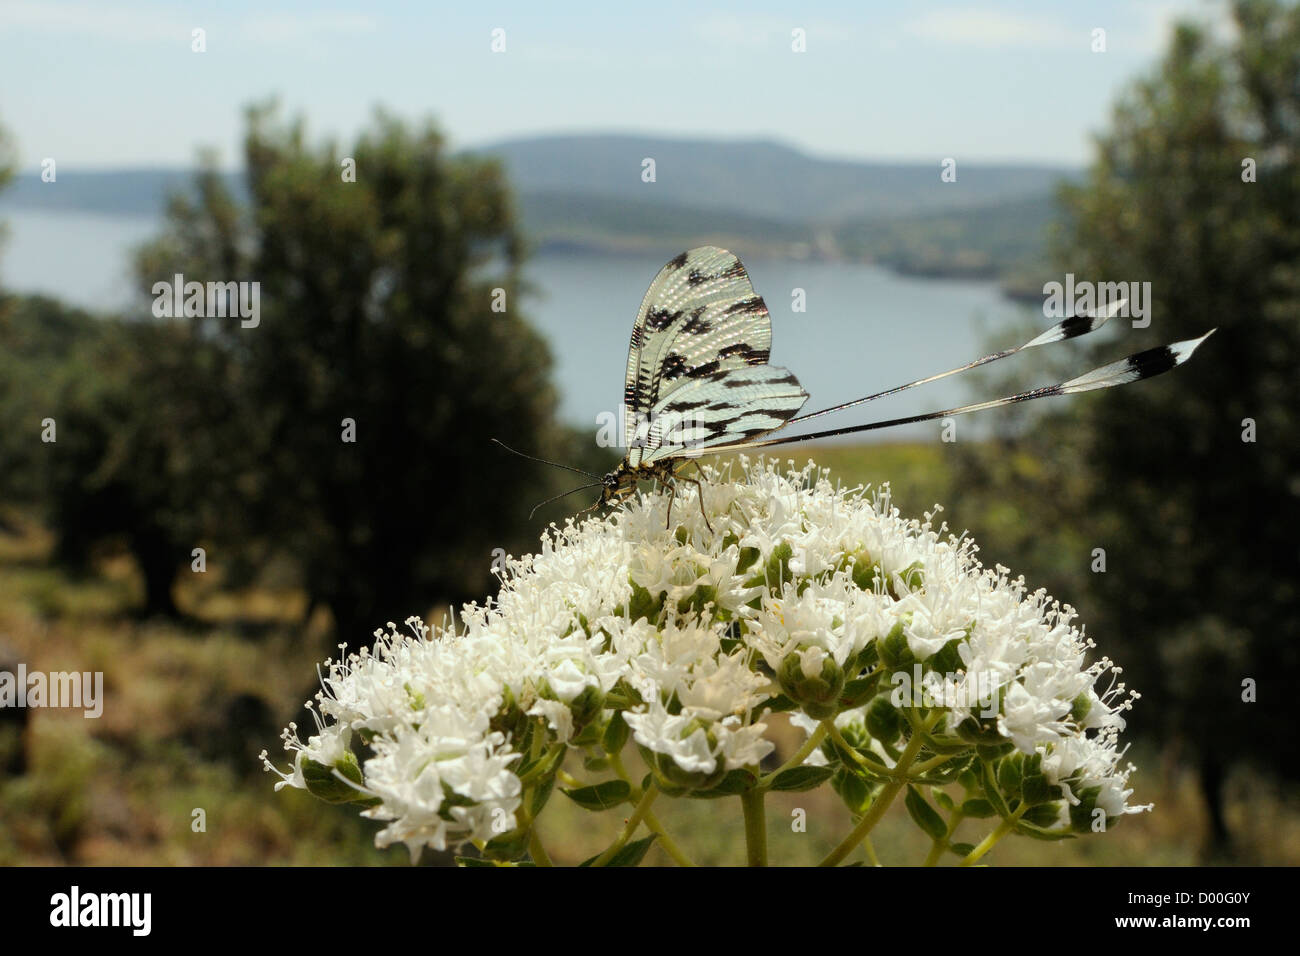 Thread-winged lacewing / Spoonwing lacewing (Nemoptera sinuata) on Cretan oregano (Origanum onites) flowers, Lesbos, Greece. Stock Photo